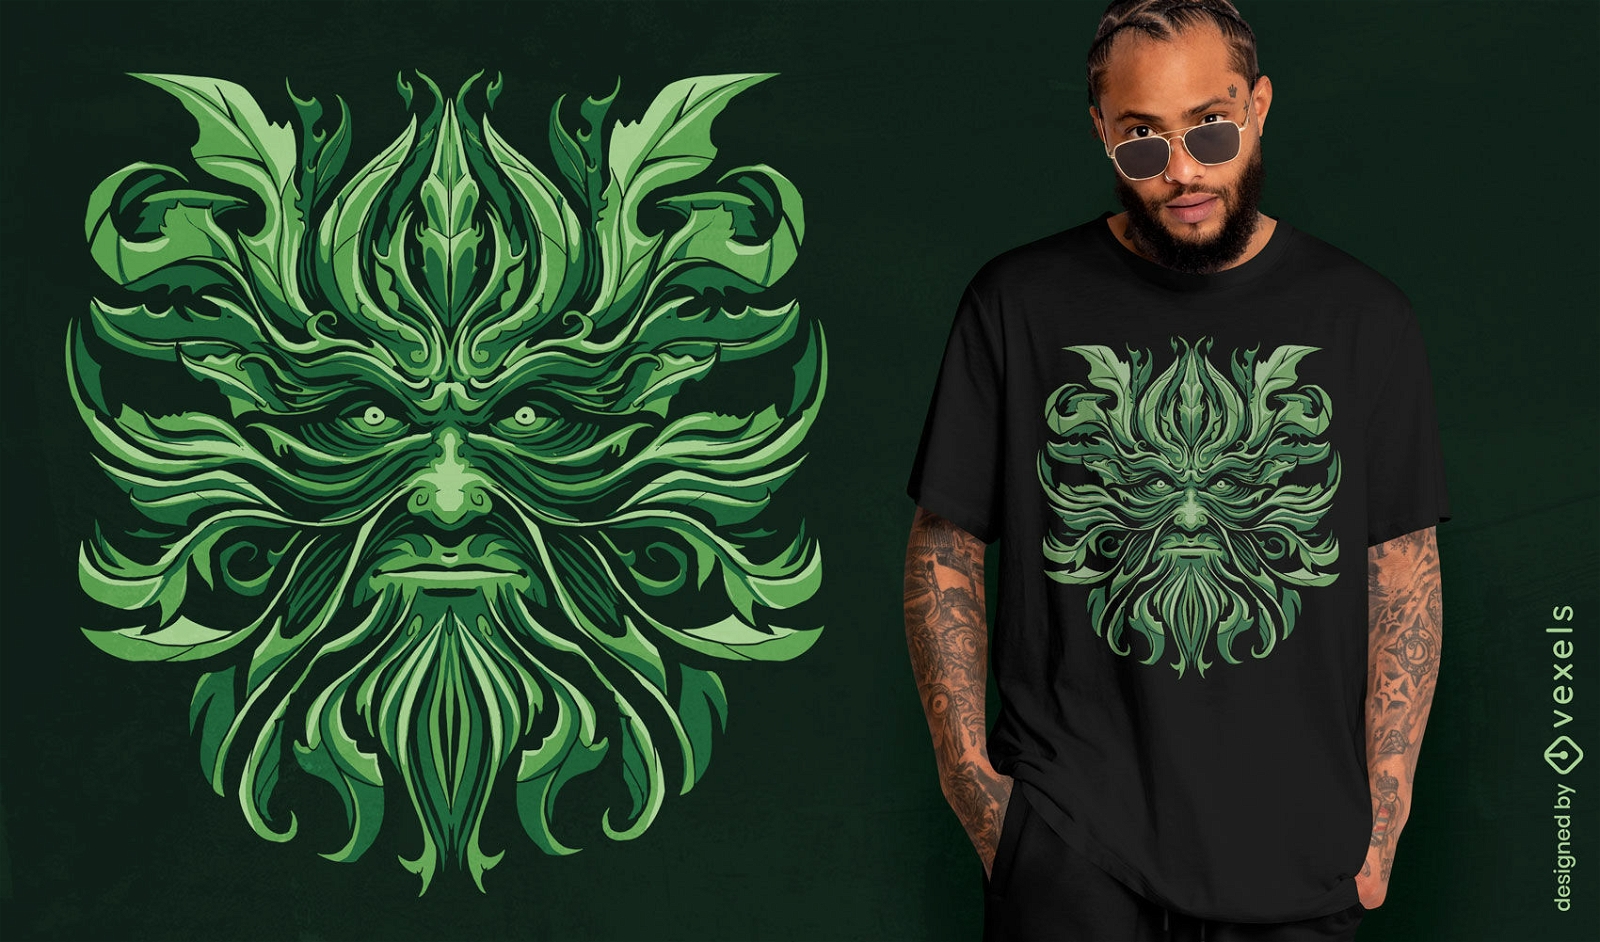 Dise?o de camiseta de mitolog?a celta de hombre verde.